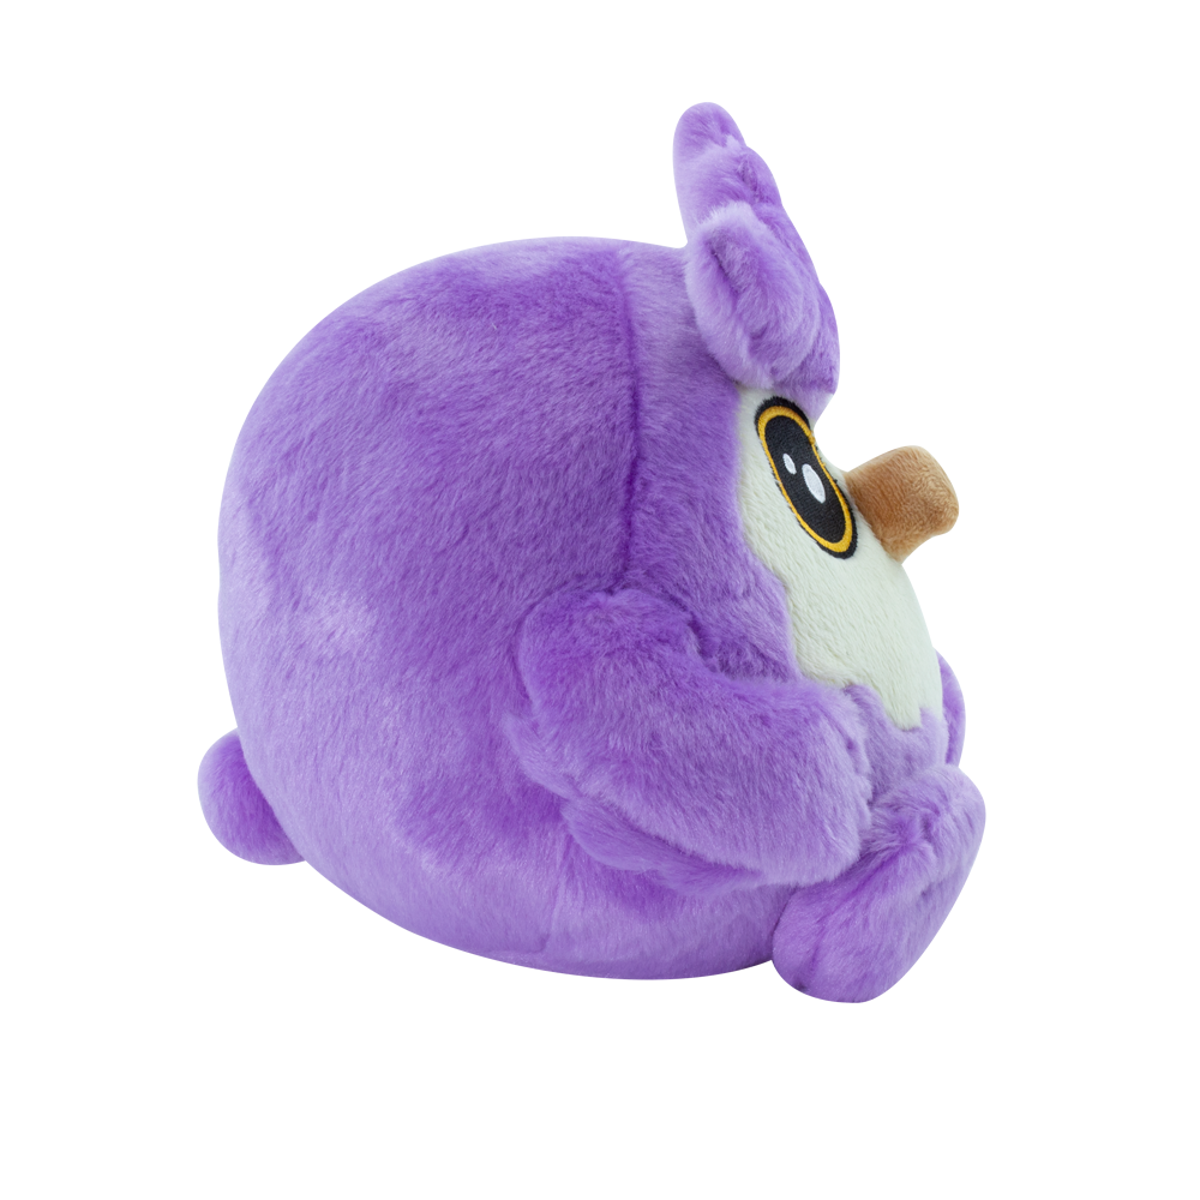 Purple squishable fluffy owlbear plush toy side view